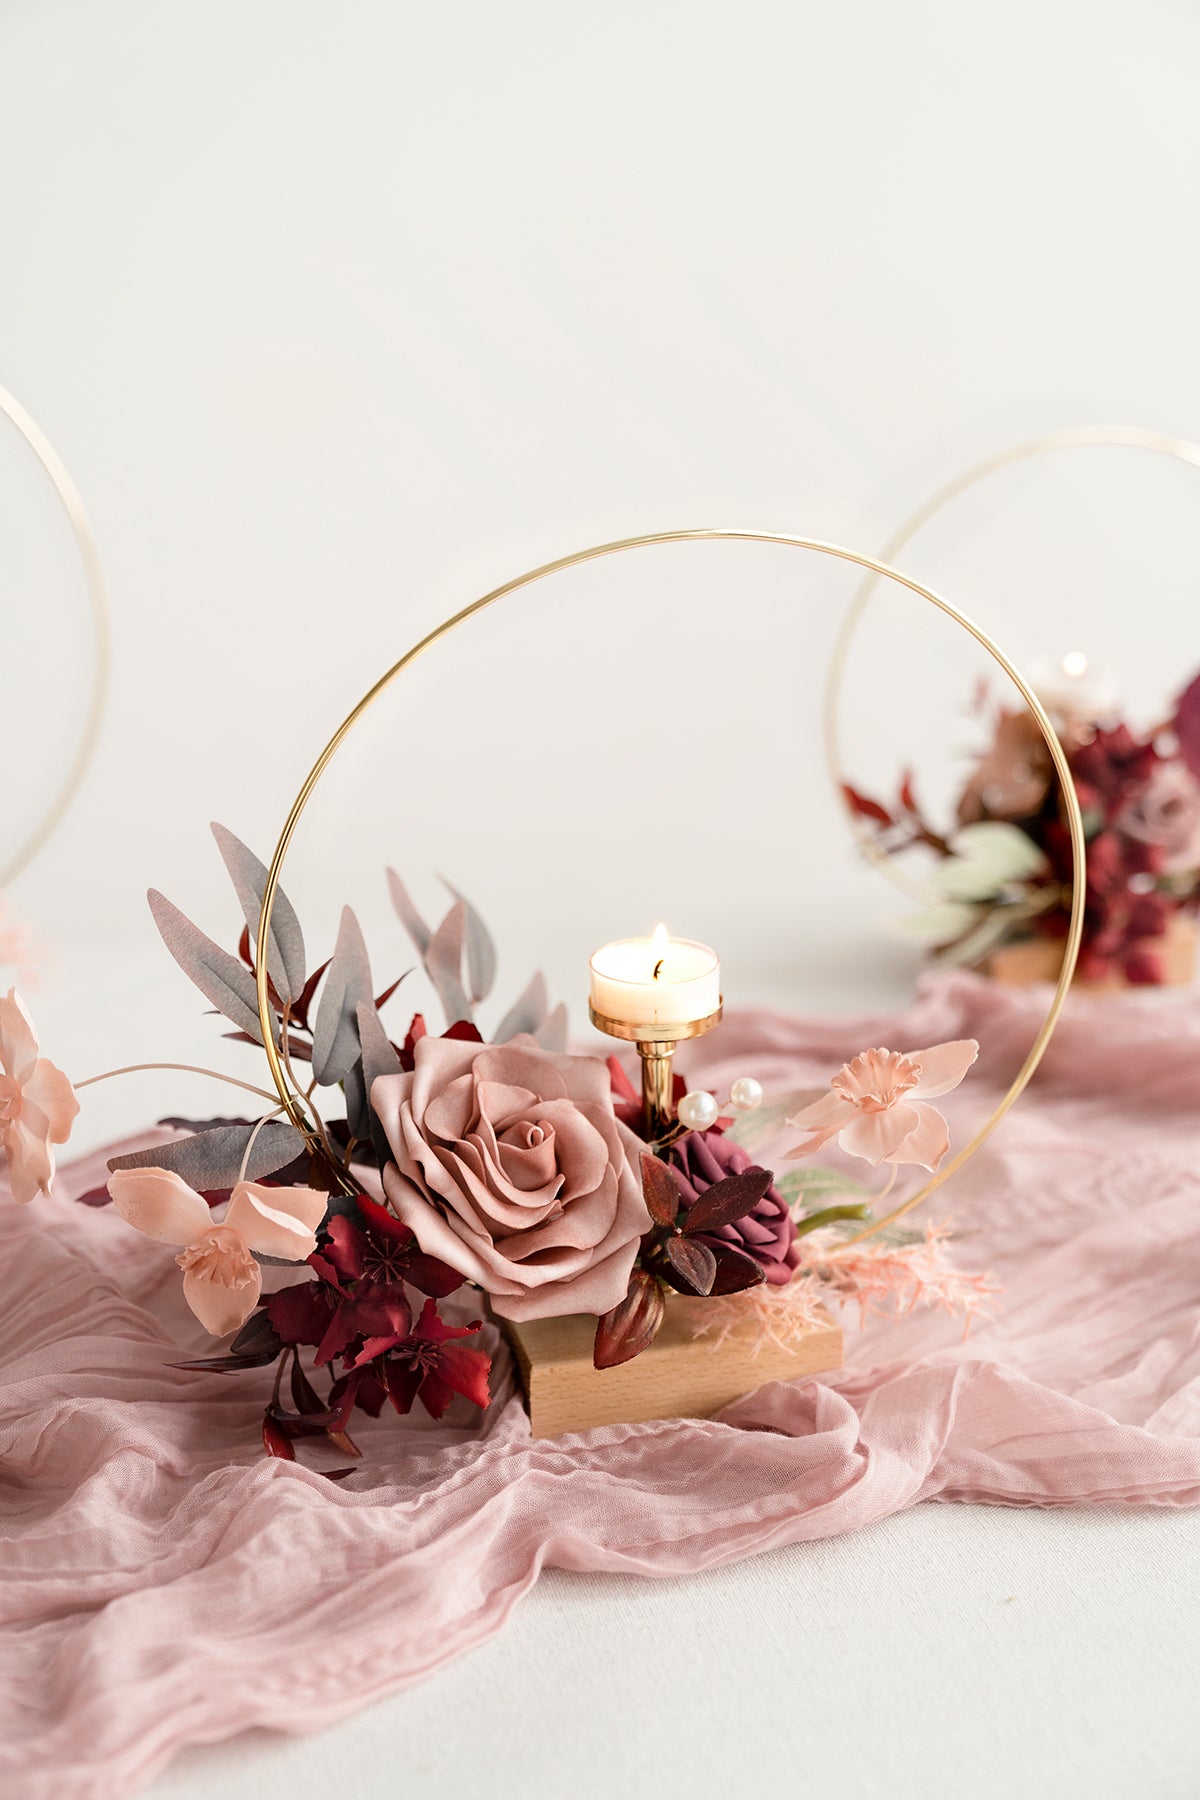 Wreath Hoop Centerpiece Set in Burgundy & Dusty Rose